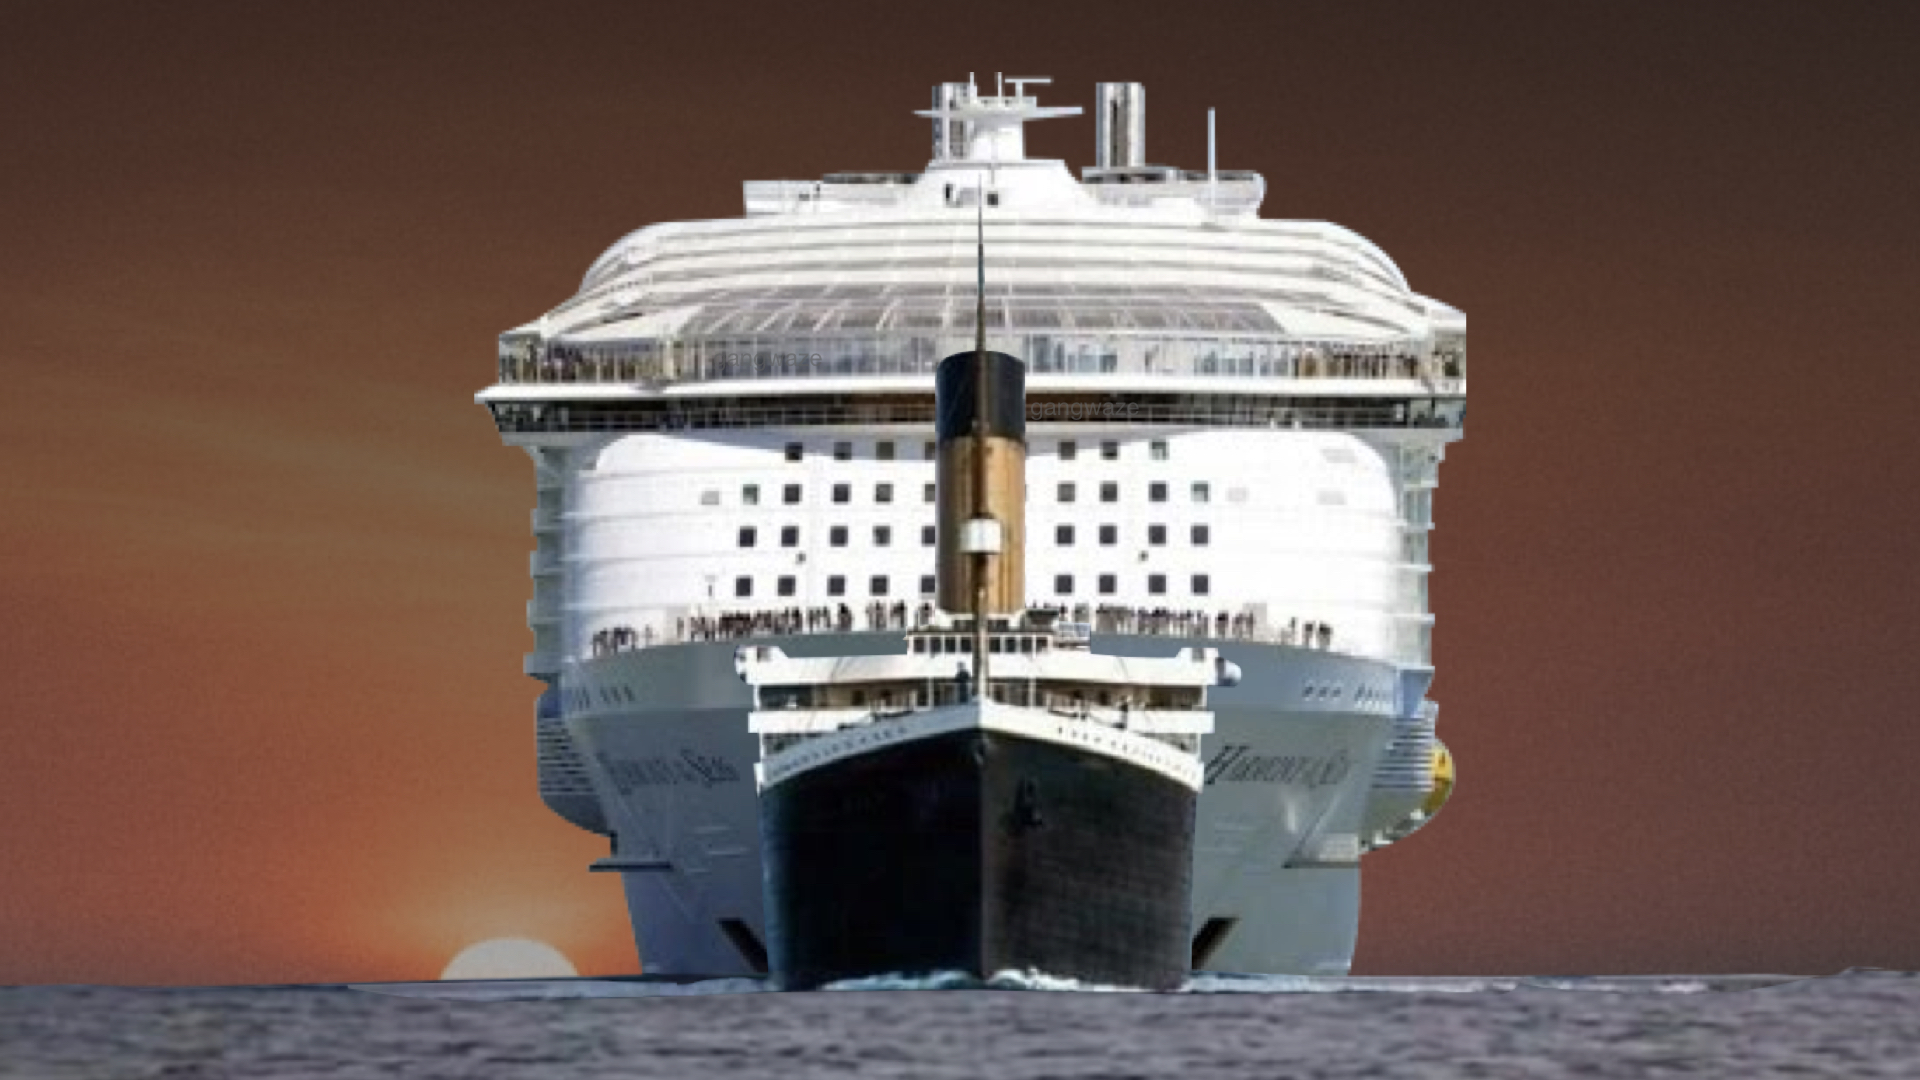 Ota selvää 31+ imagen titanic compared to modern cruise ship